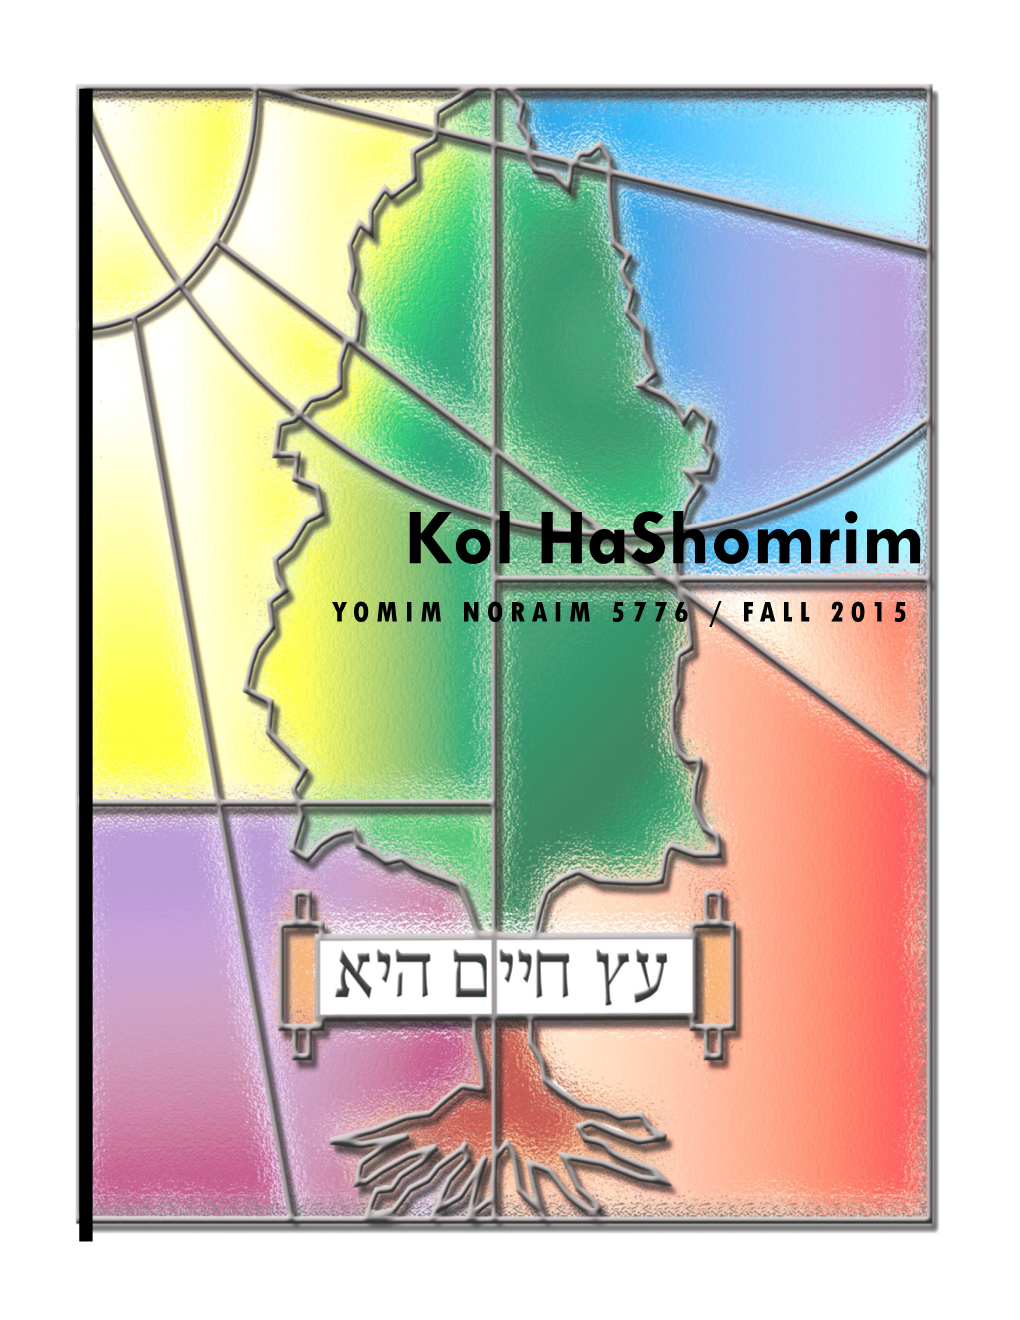 Kol Hashomrim YOMIM NORAIM 5776 / FALL 2015